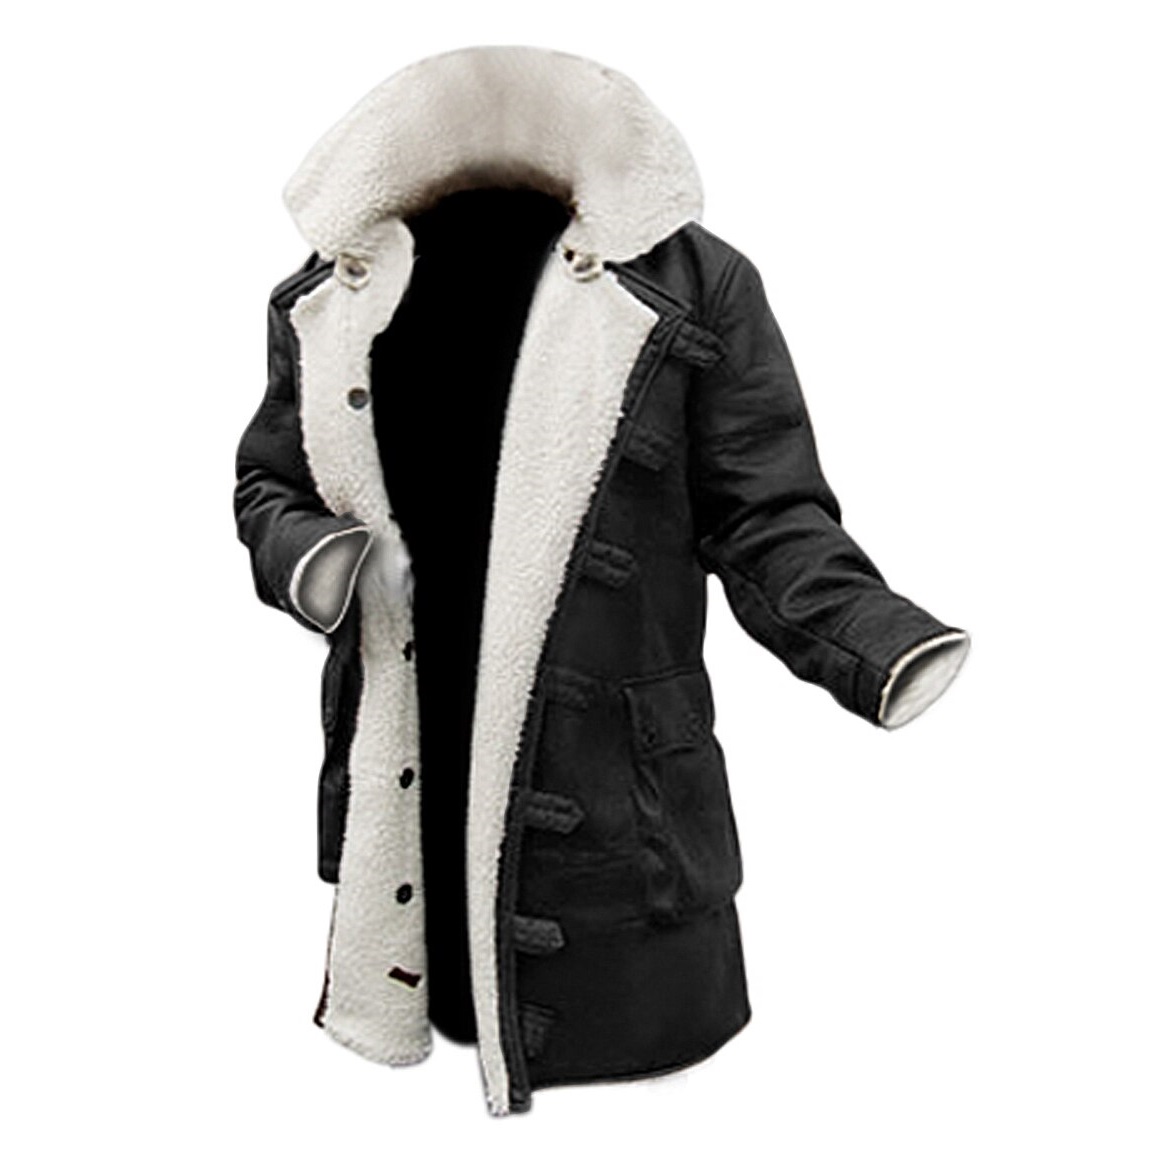 Bane Black Shearling Leather Coat for Winter – Swedish Bomber Jacket